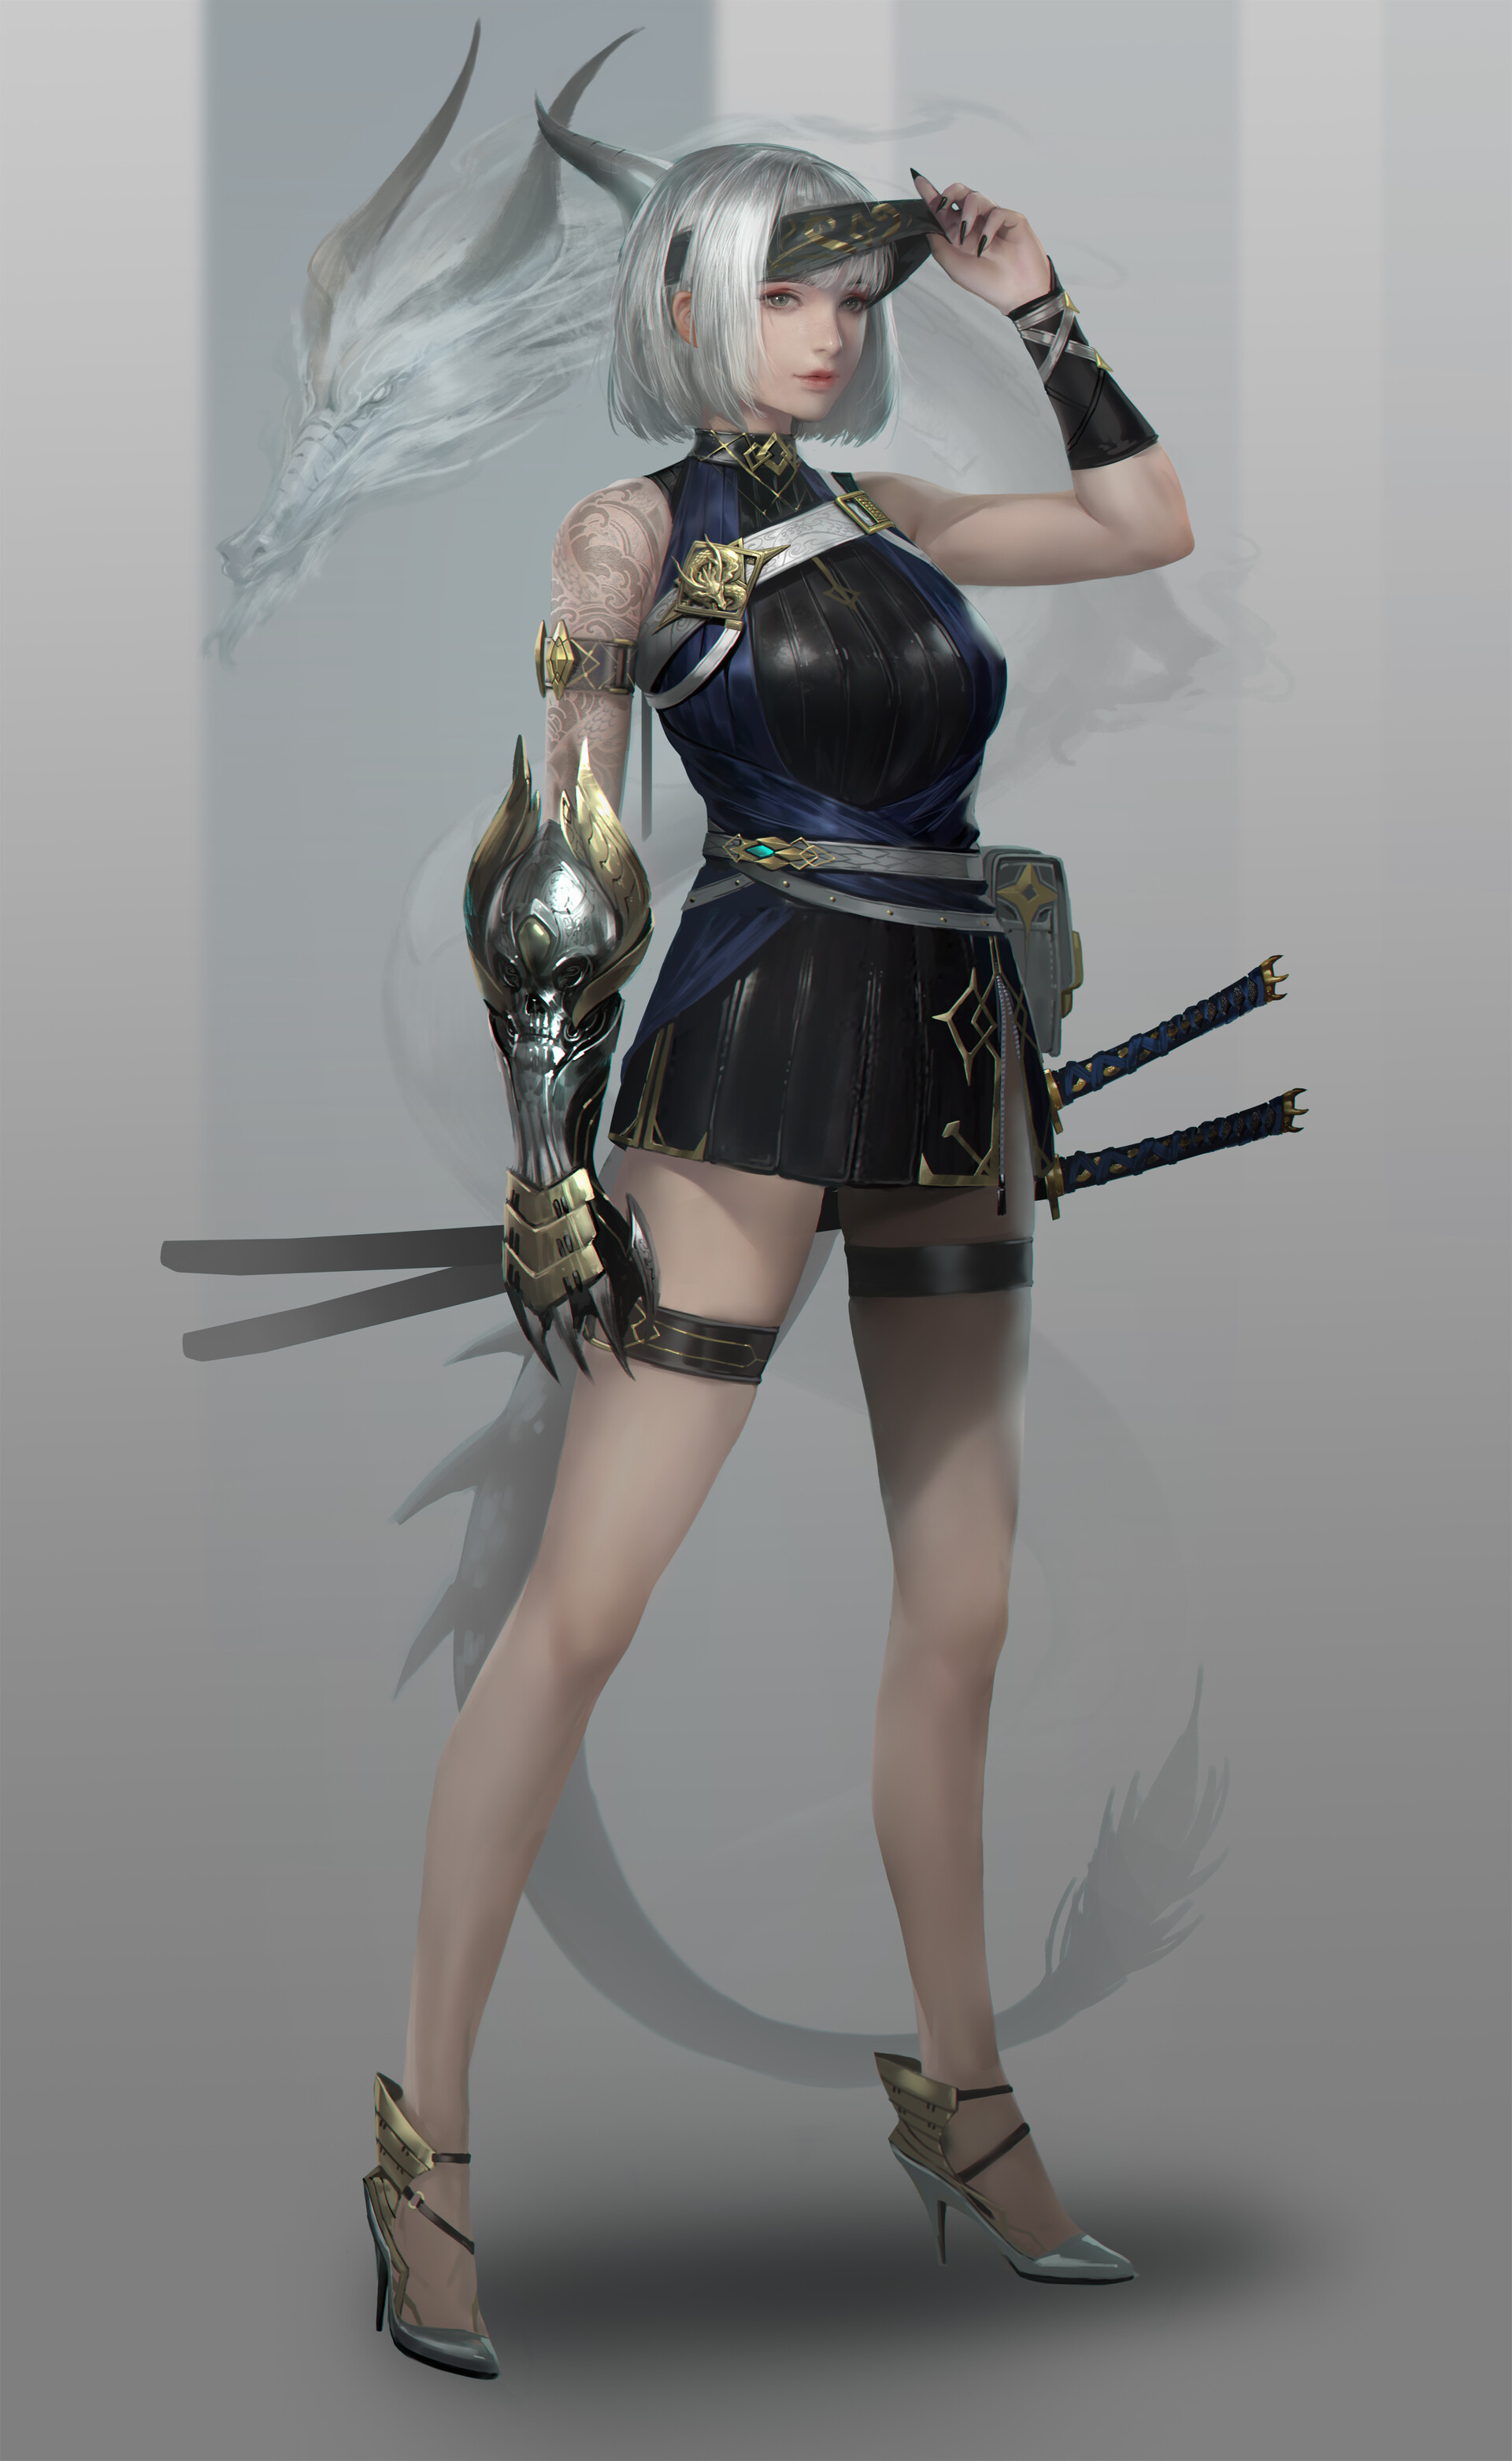 San Mufan Drawing Women Warrior Silver Hair Short Hair Headband Armor Weapon Sword Katana Dragon 1920x3125